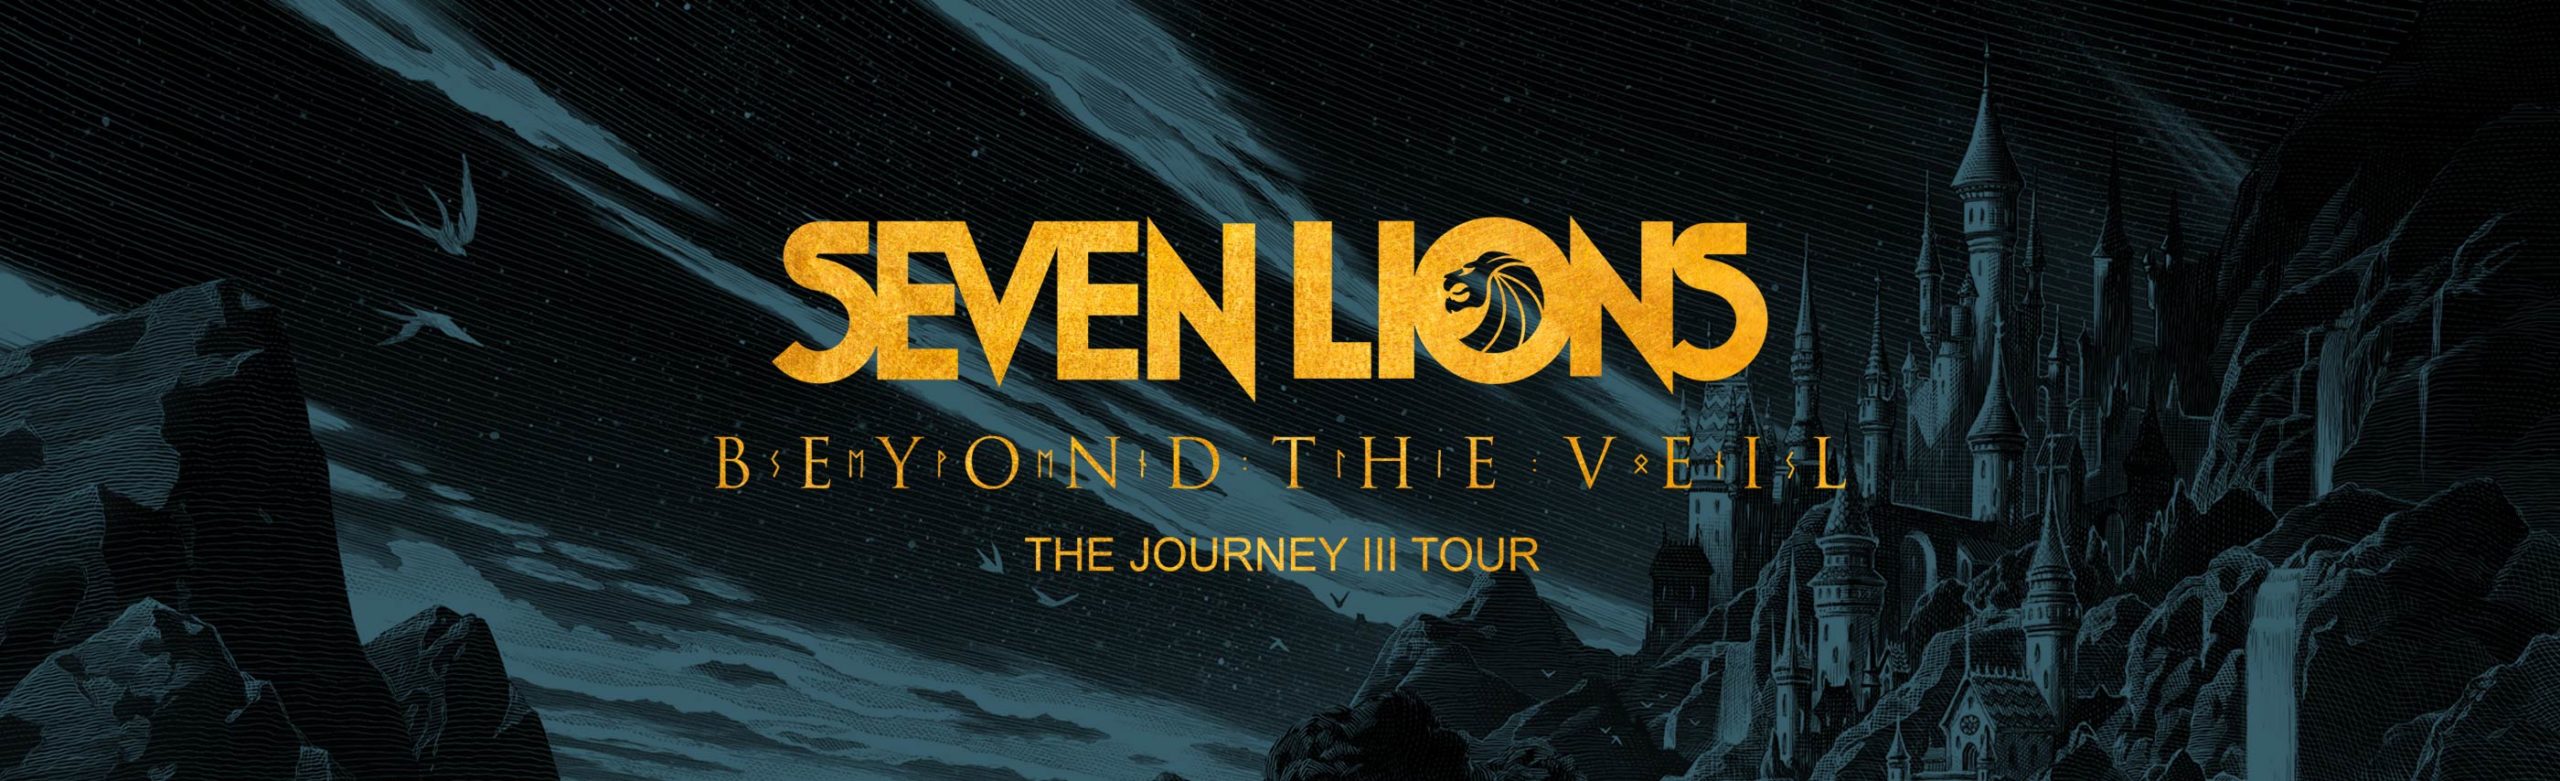 Seven Lions Confirms Concert at KettleHouse Amphitheater Image